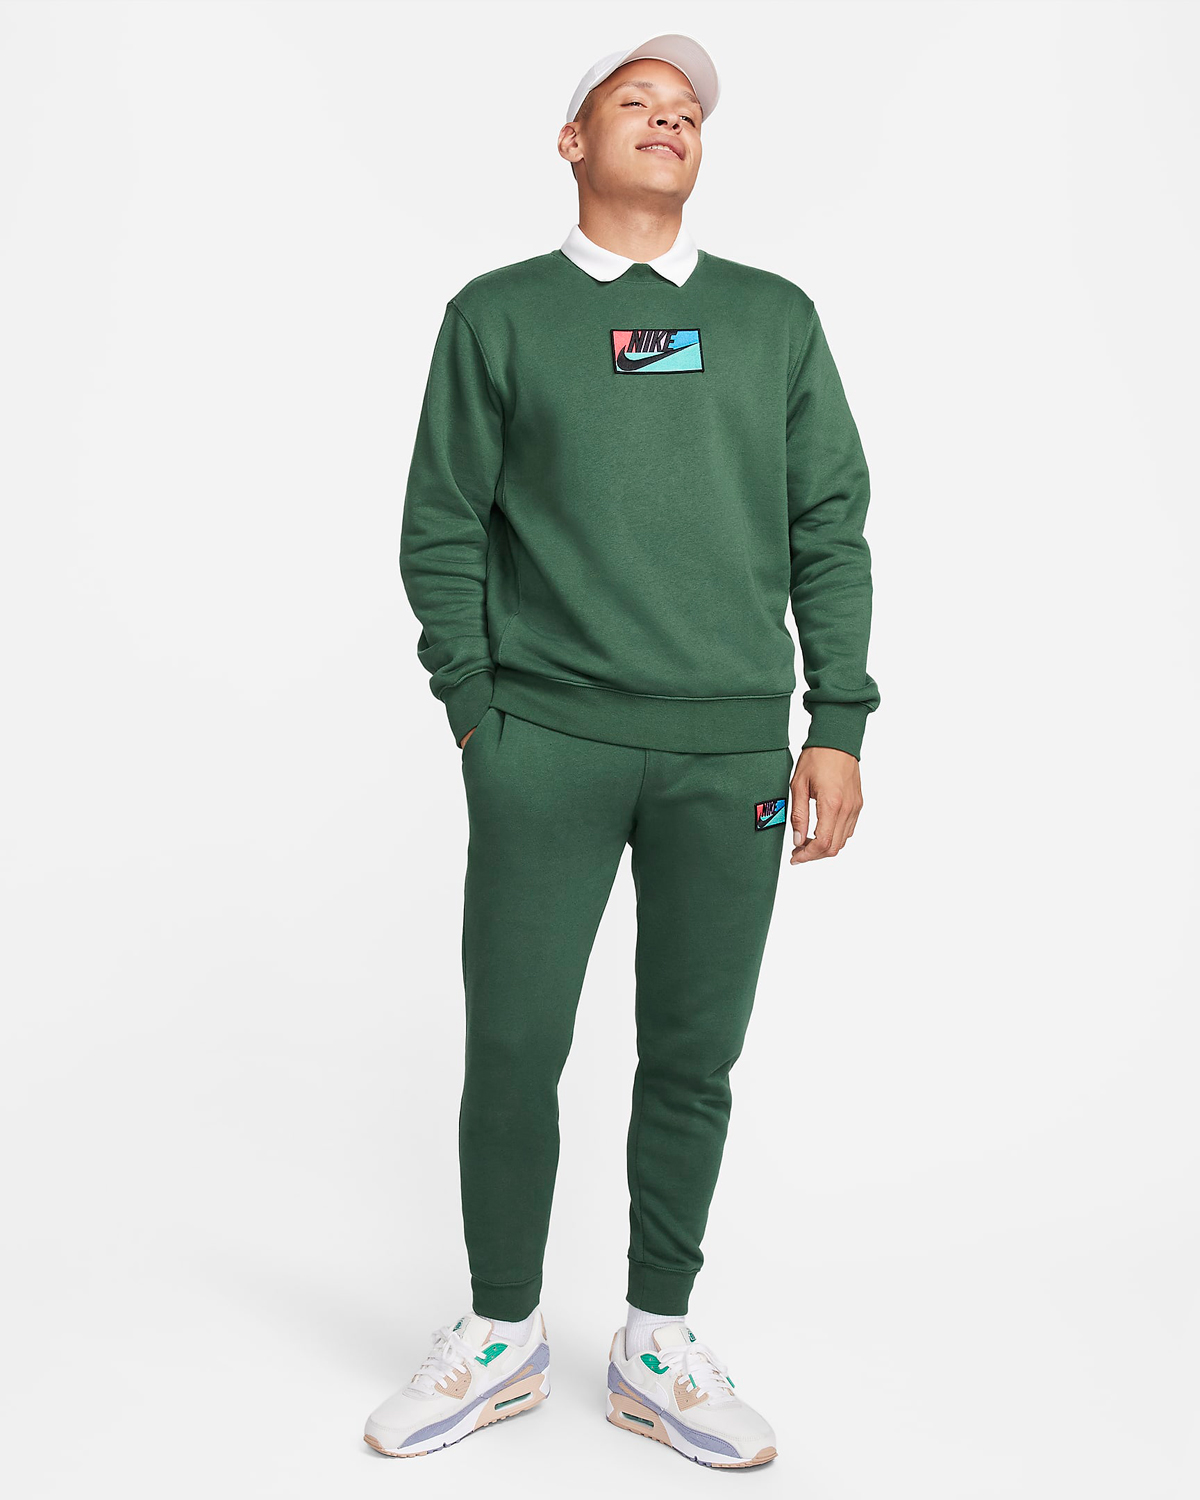 Nike-Club-Fleece-Patch-Crew-Sweatshirt-Fir-Green-Outfit